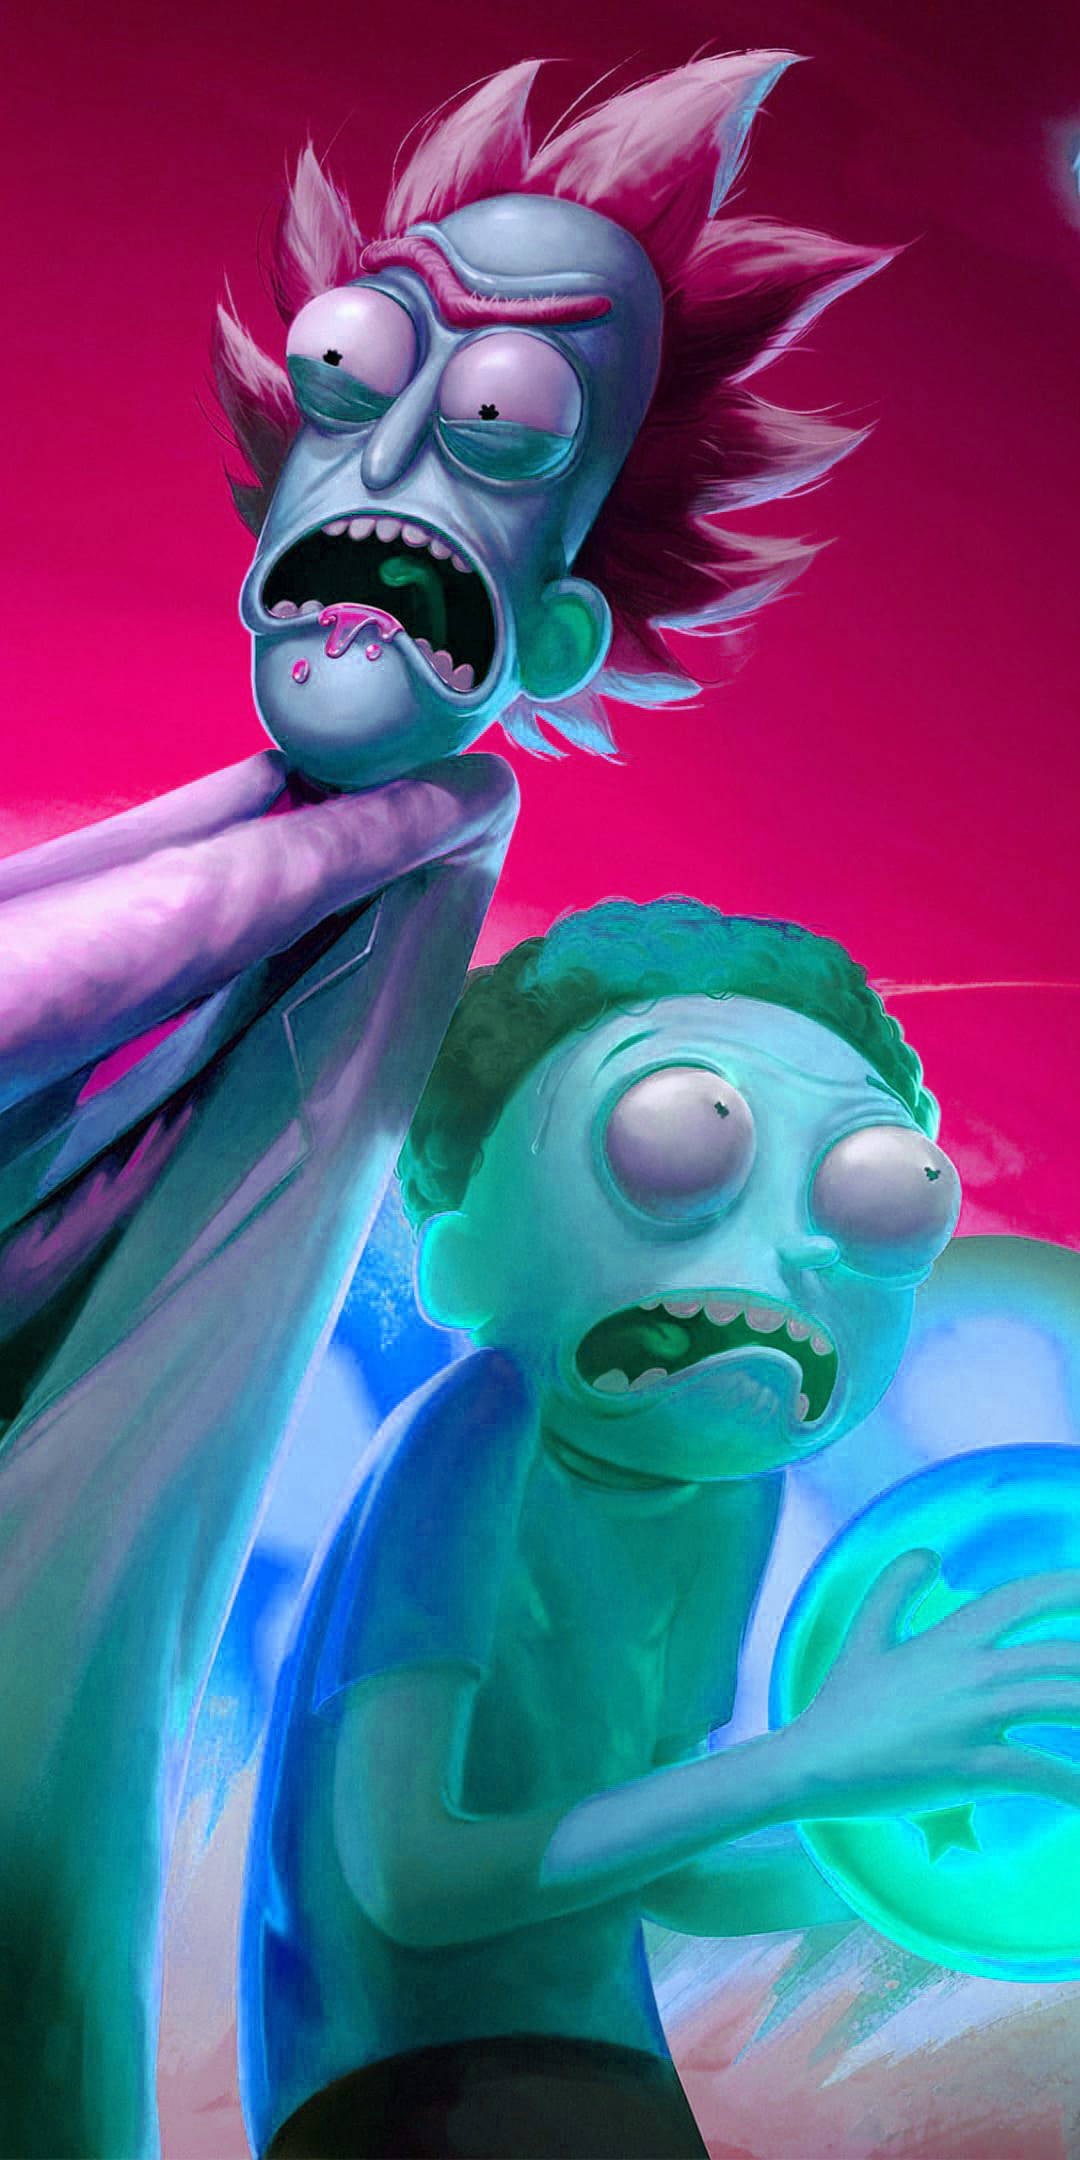 Rick and Morty Wallpaper - NawPic